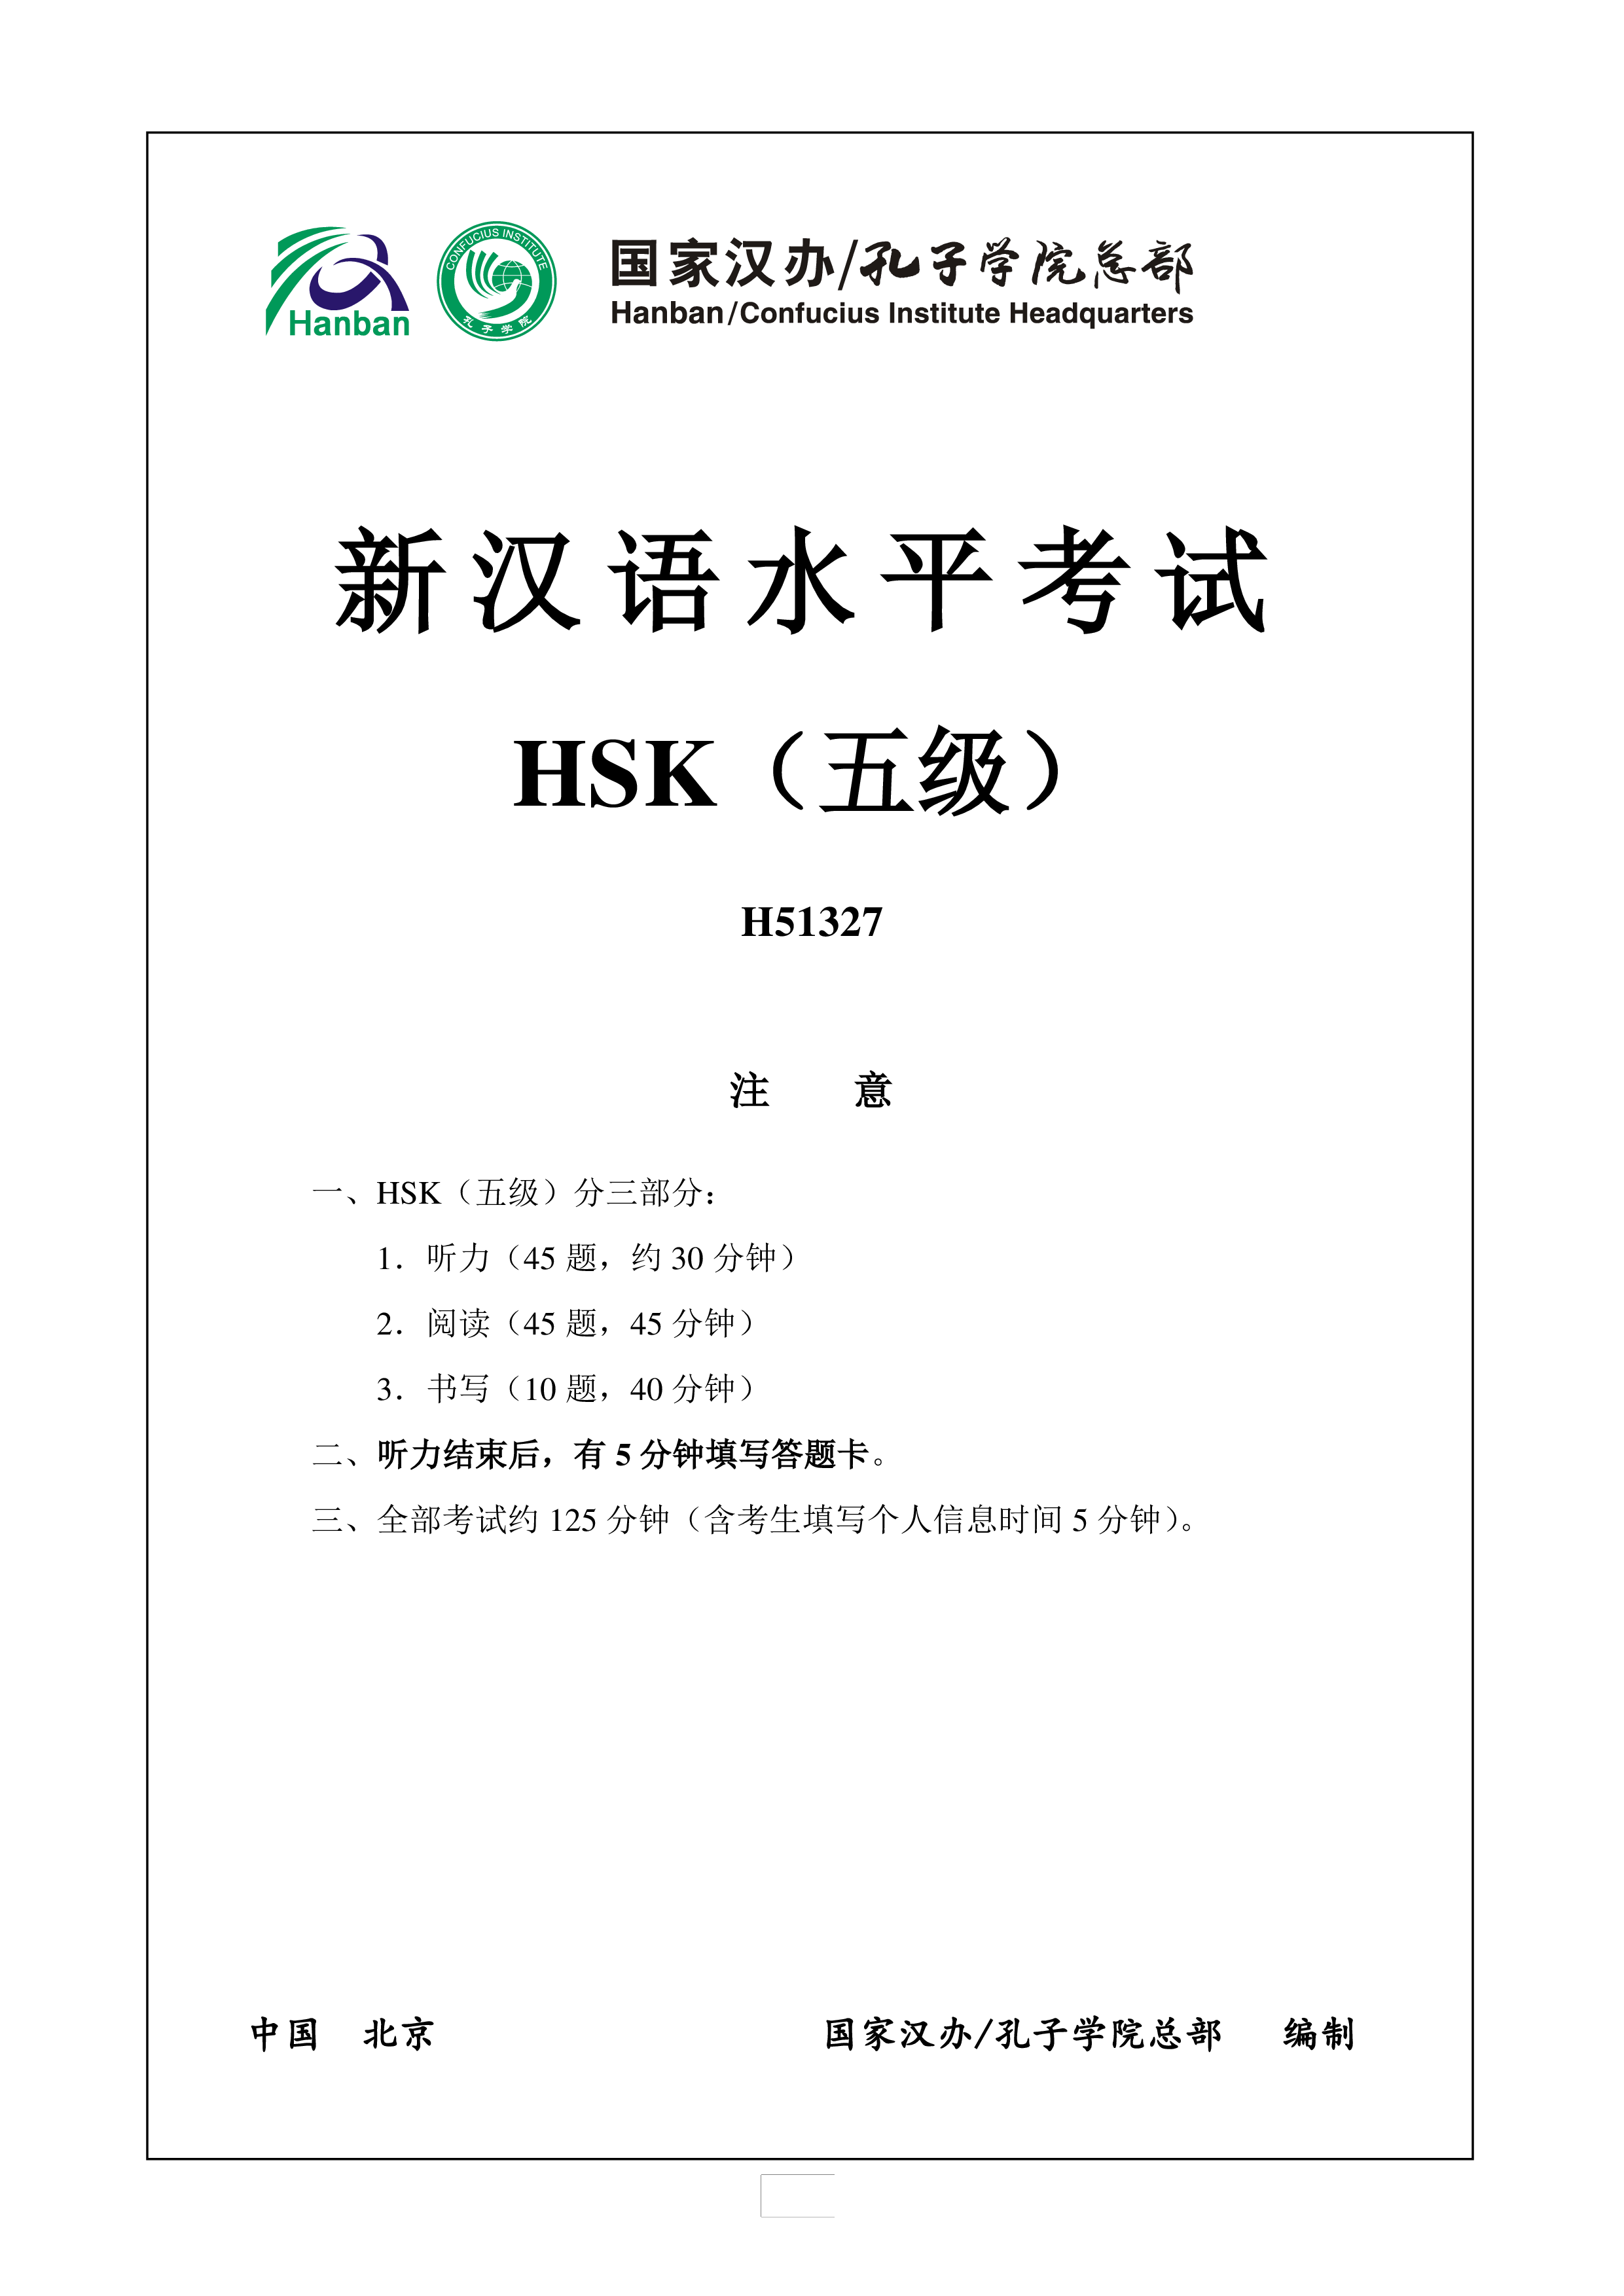 hsk5 chinese exam, incl audio and answer # h51327 plantilla imagen principal